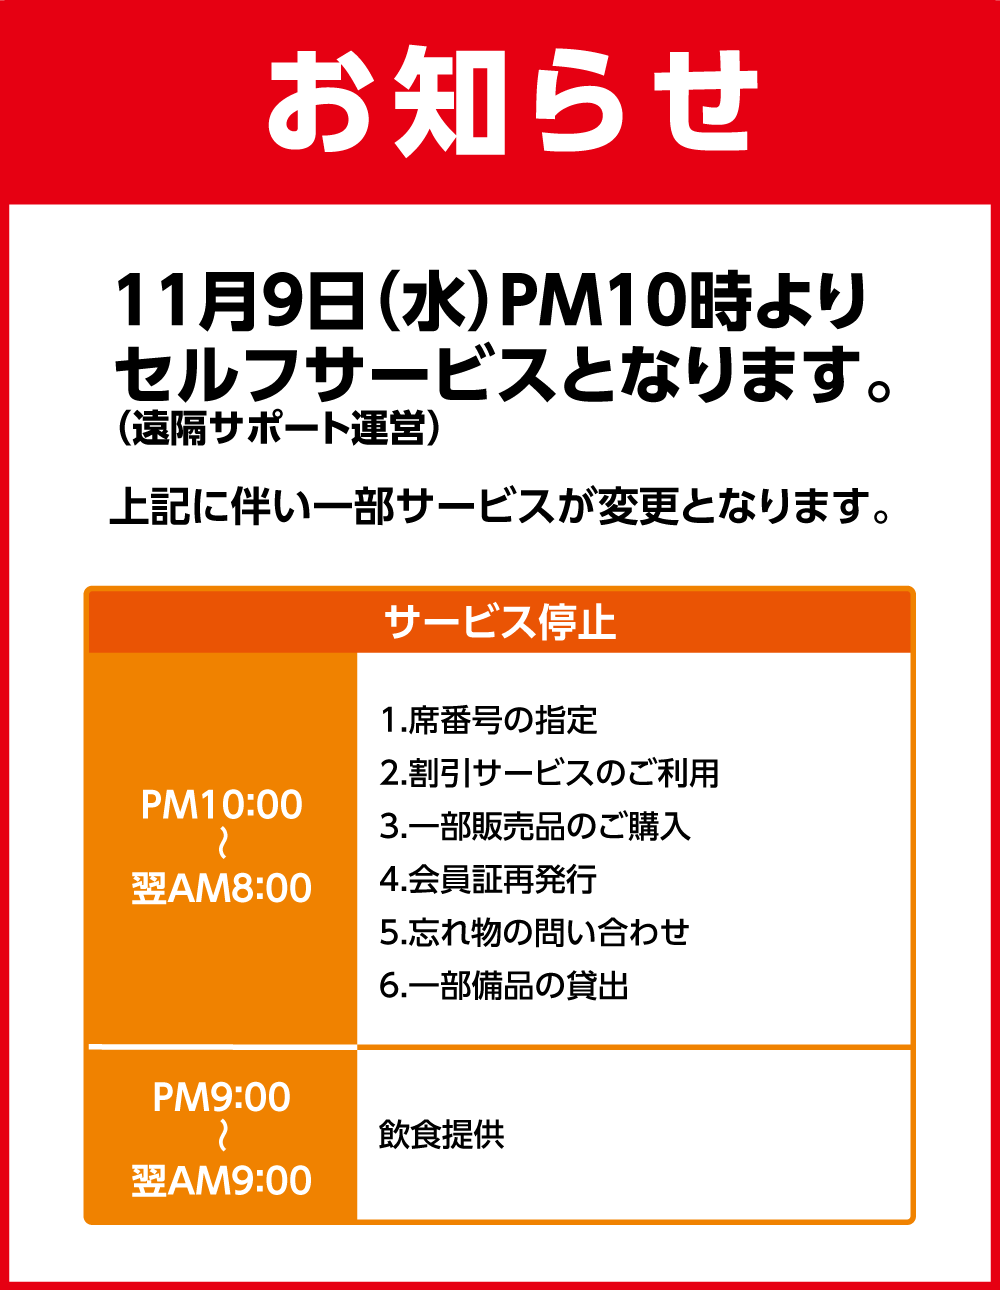 20221109_remote_W1000_tatebayashimatsubara.png